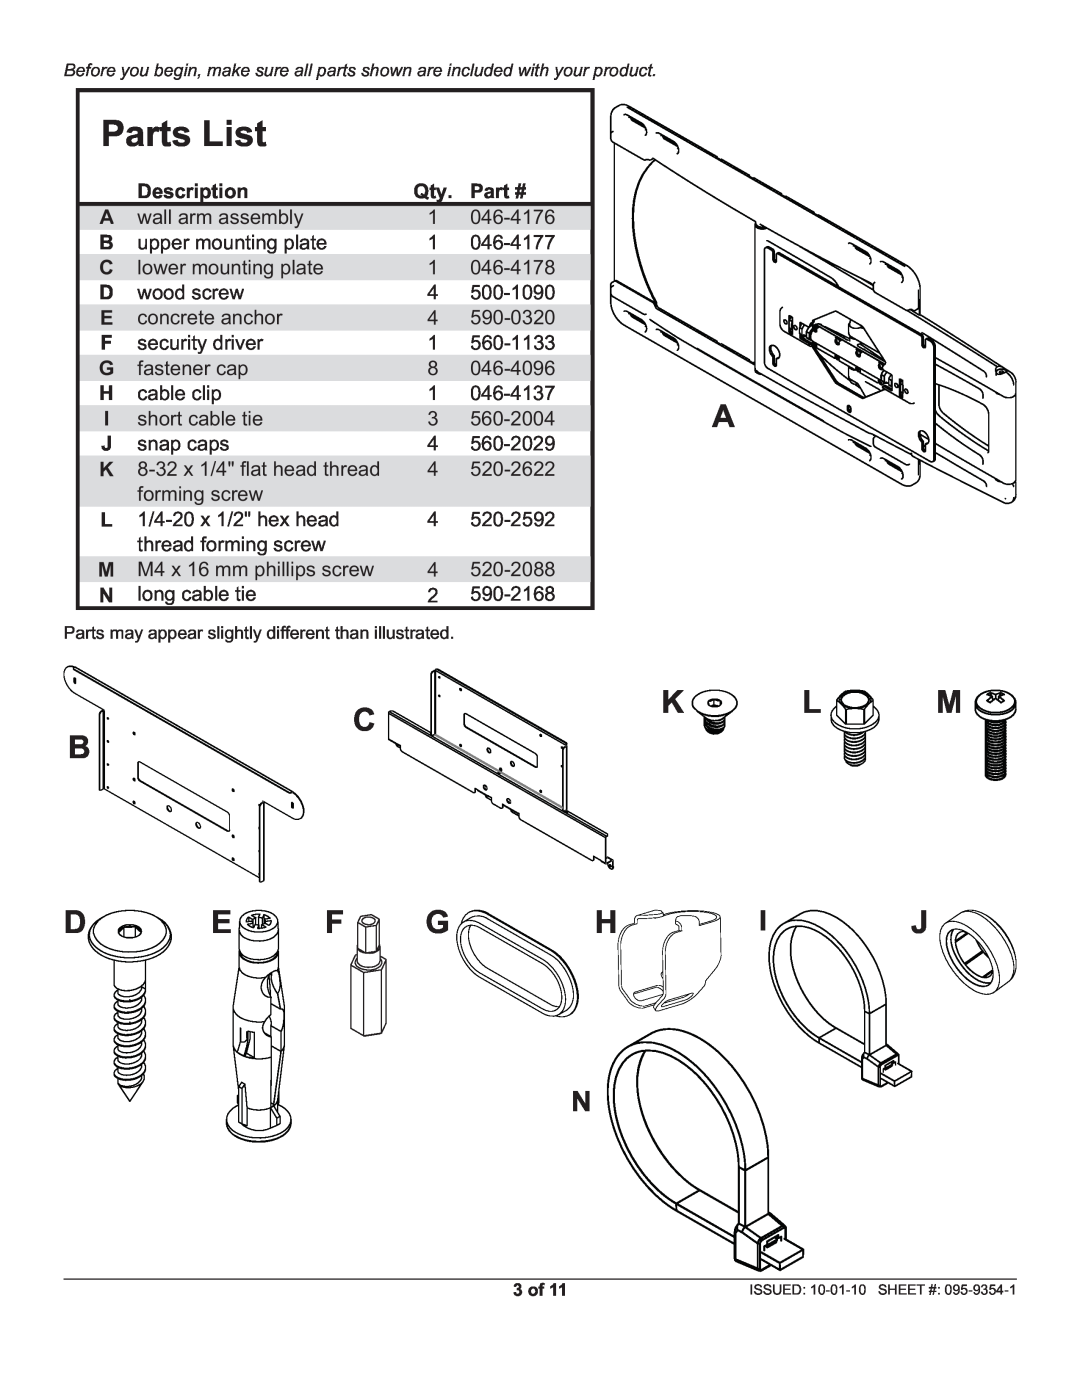 Peerless Industries SUAC9000 manual F G H I J, Parts List, Description 